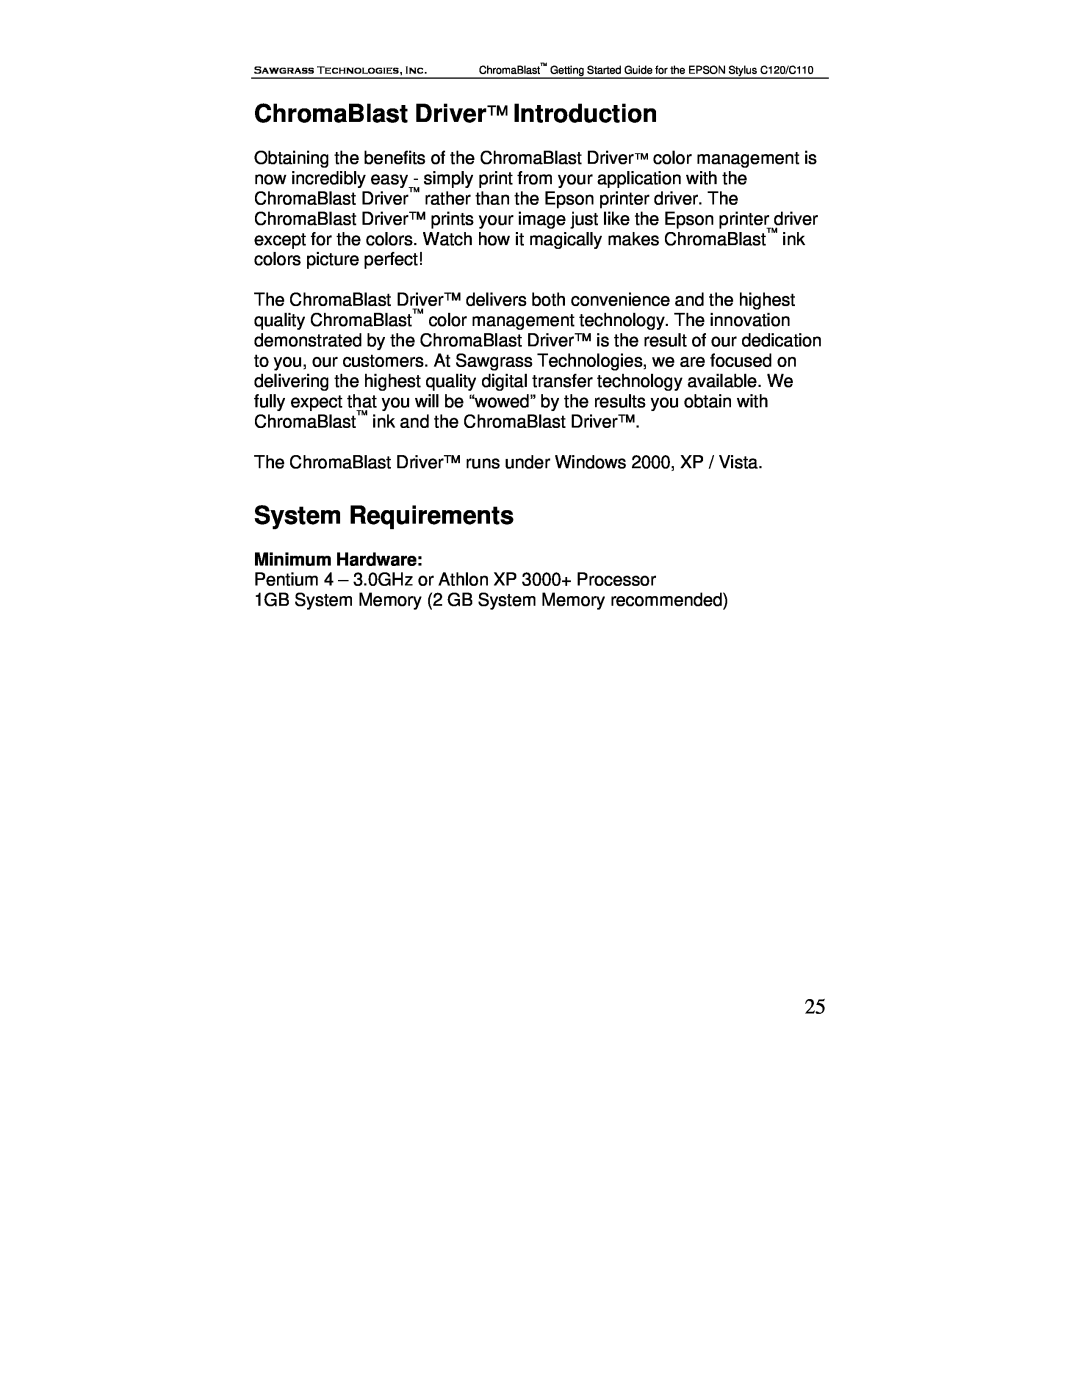 Epson C120, C110 manual ChromaBlast Driver Introduction, System Requirements, Minimum Hardware 